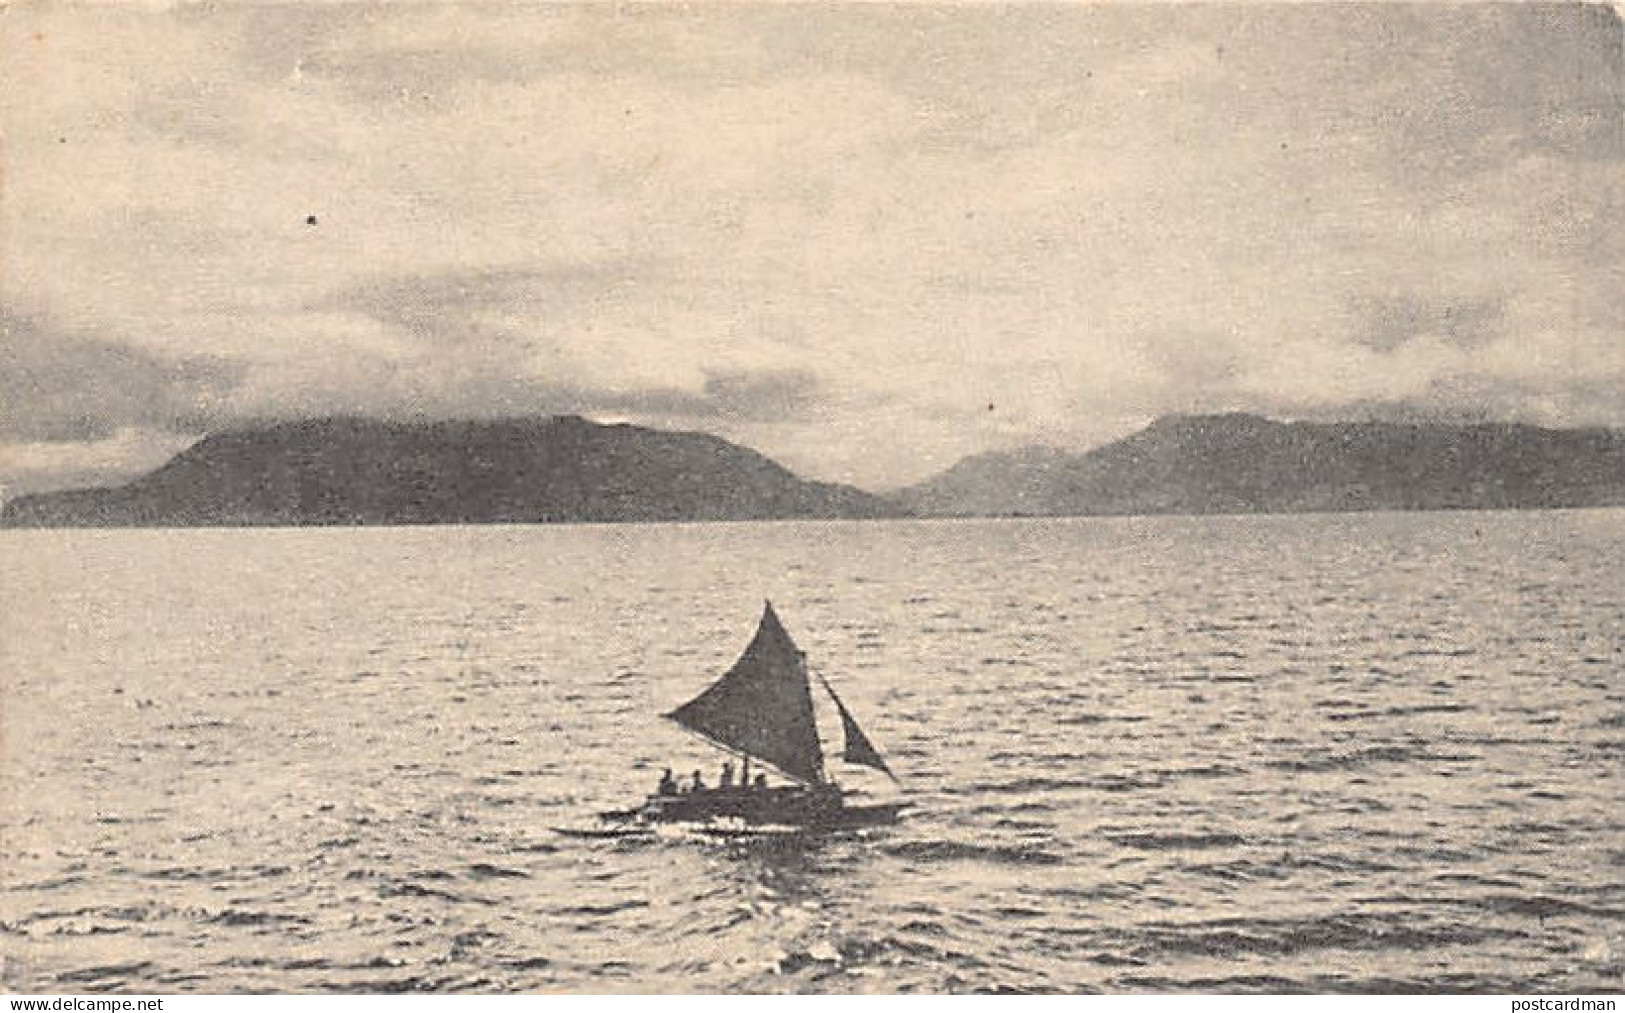 Vanuatu - New Hebrides - A Native Outrigger Canoe Under Sail - Publ. Dunn  - Vanuatu